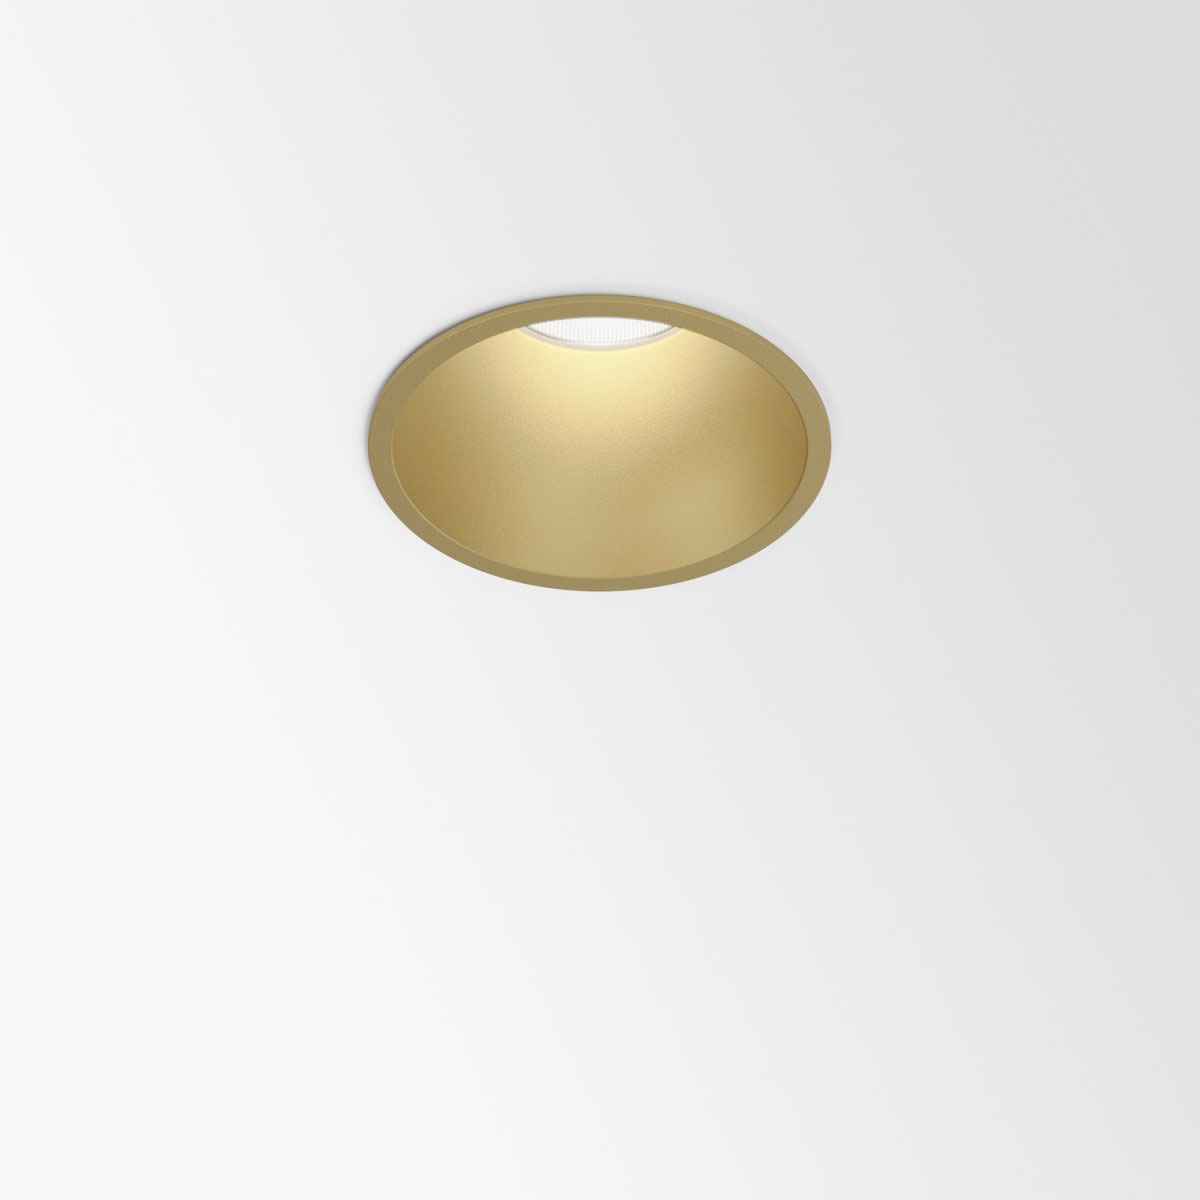 DEEP RINGO LED 93033 Einbaustrahler, Ø: 8,1 cm, Goldfarben, Warmweiß 3000K